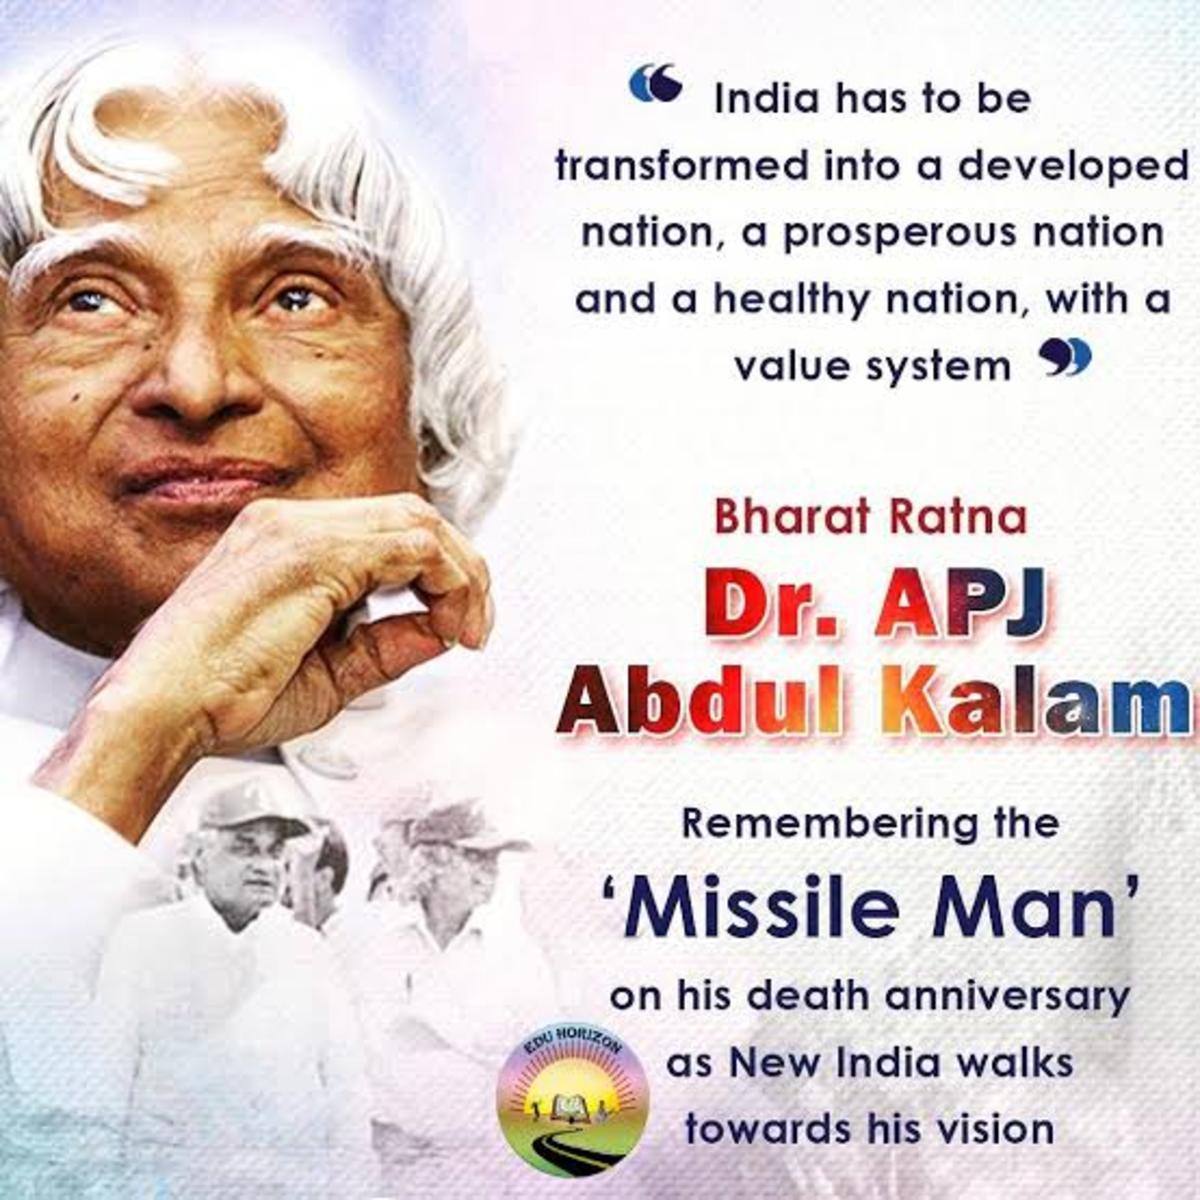 A.P.J. Abdul Kalam: The Missile Man.